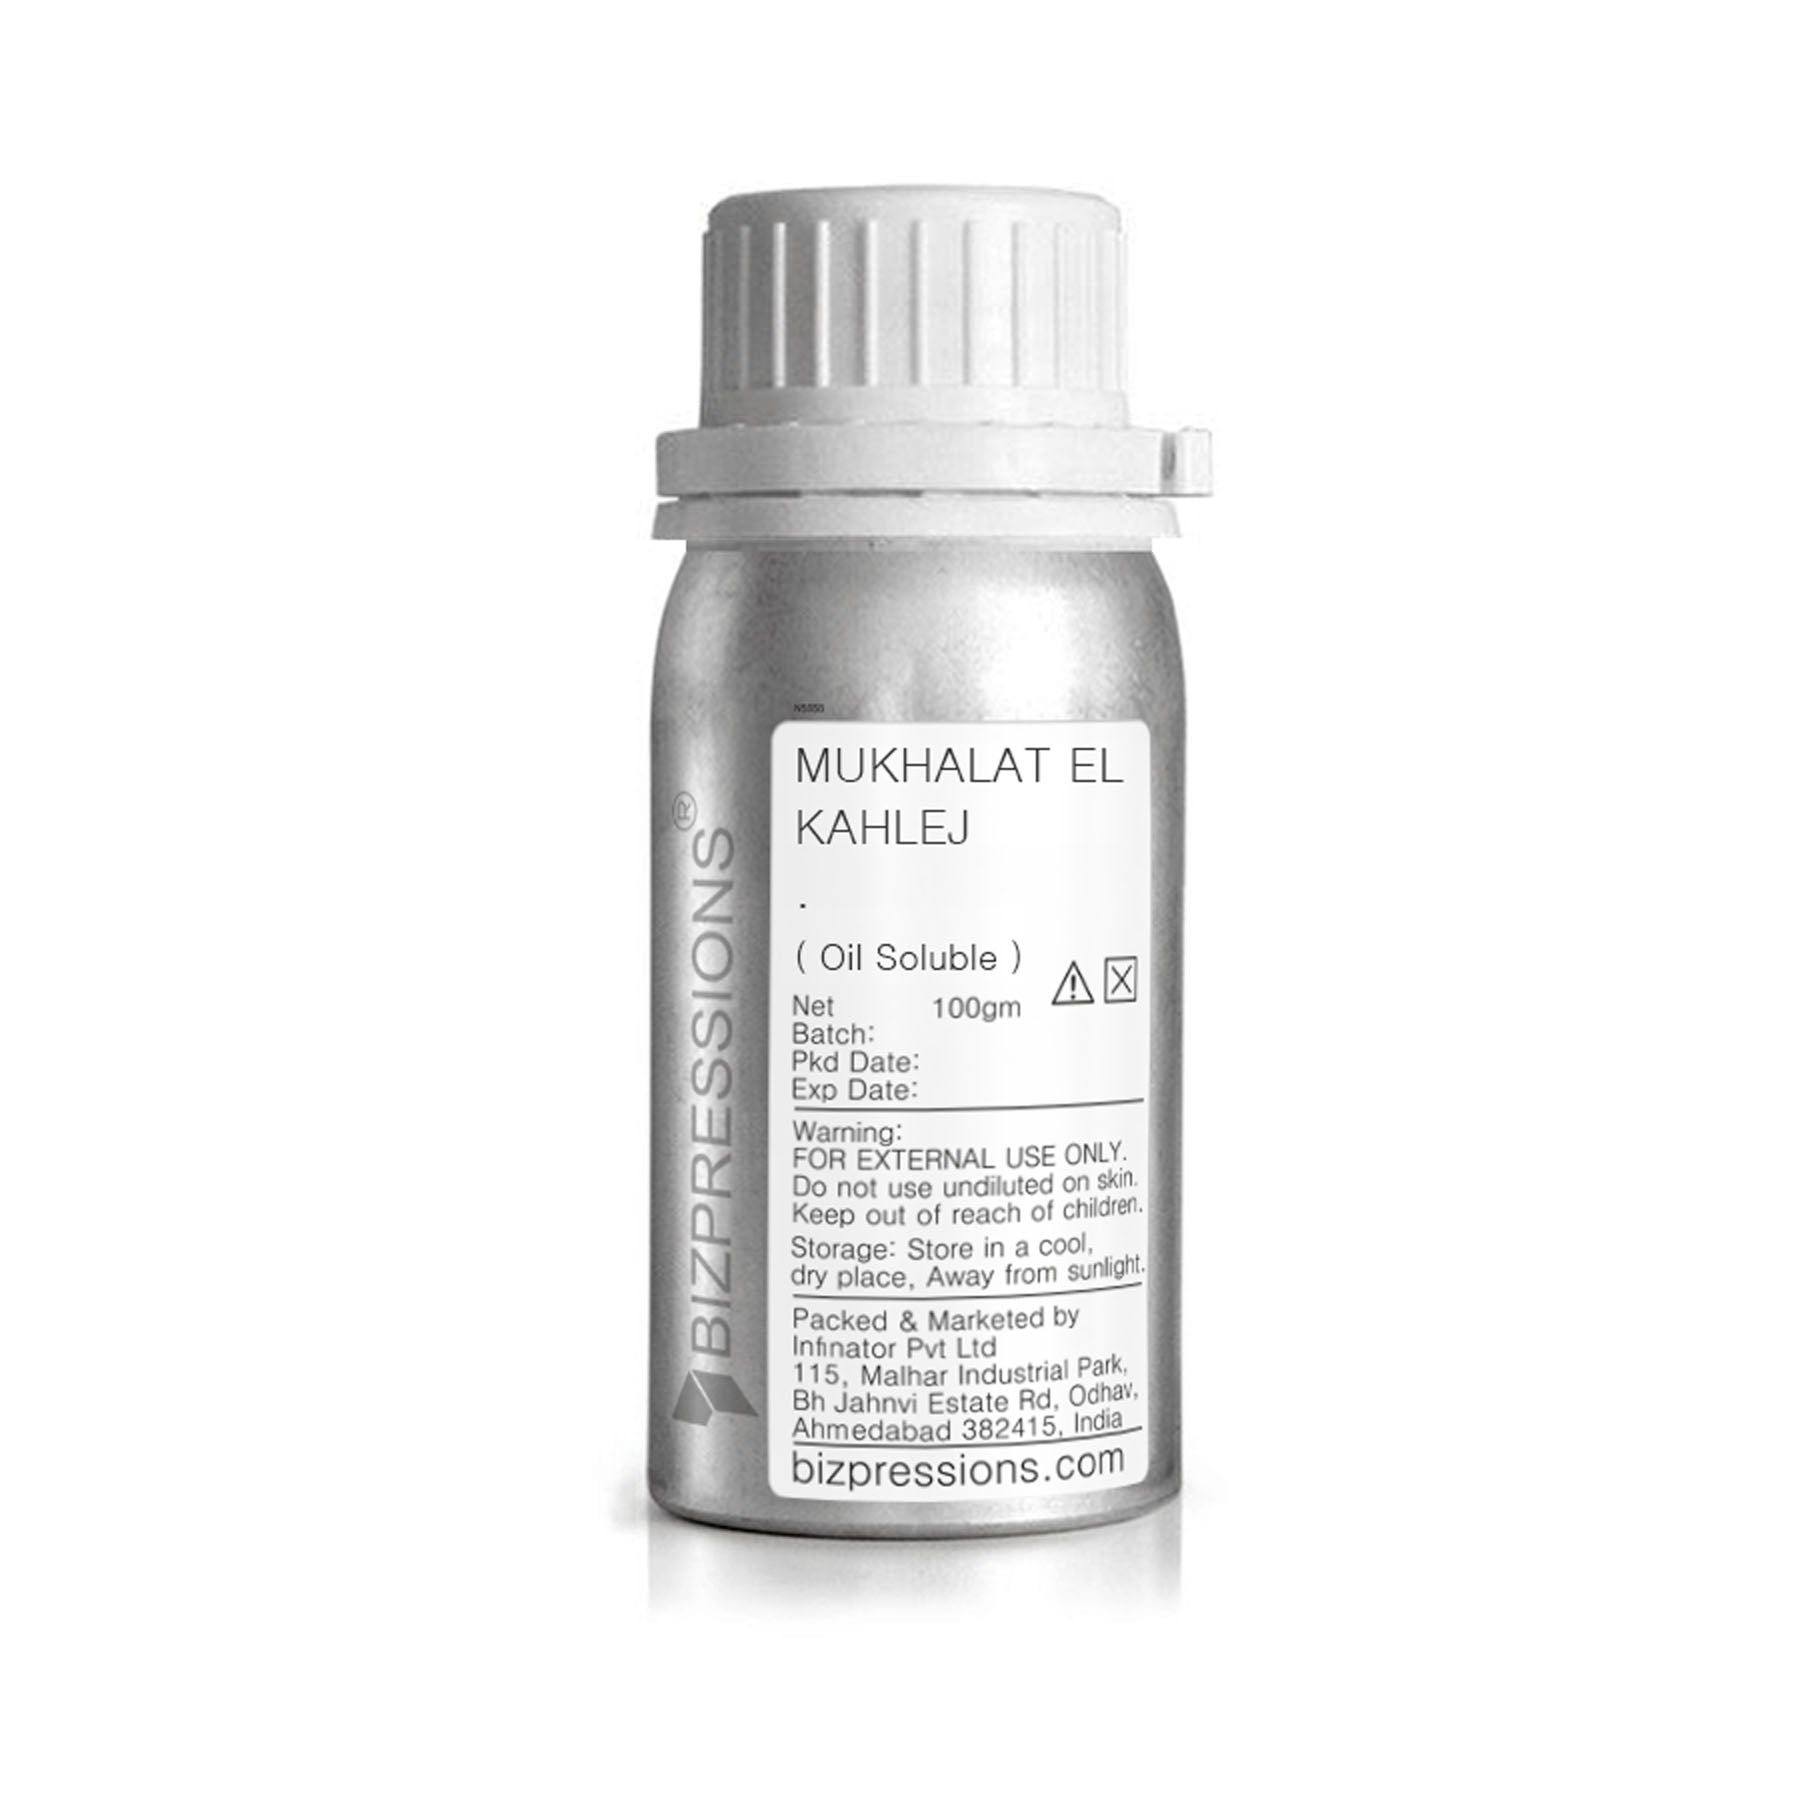 MUKHALAT EL KAHLEJ - Fragrance ( Oil Soluble ) - 100 gm